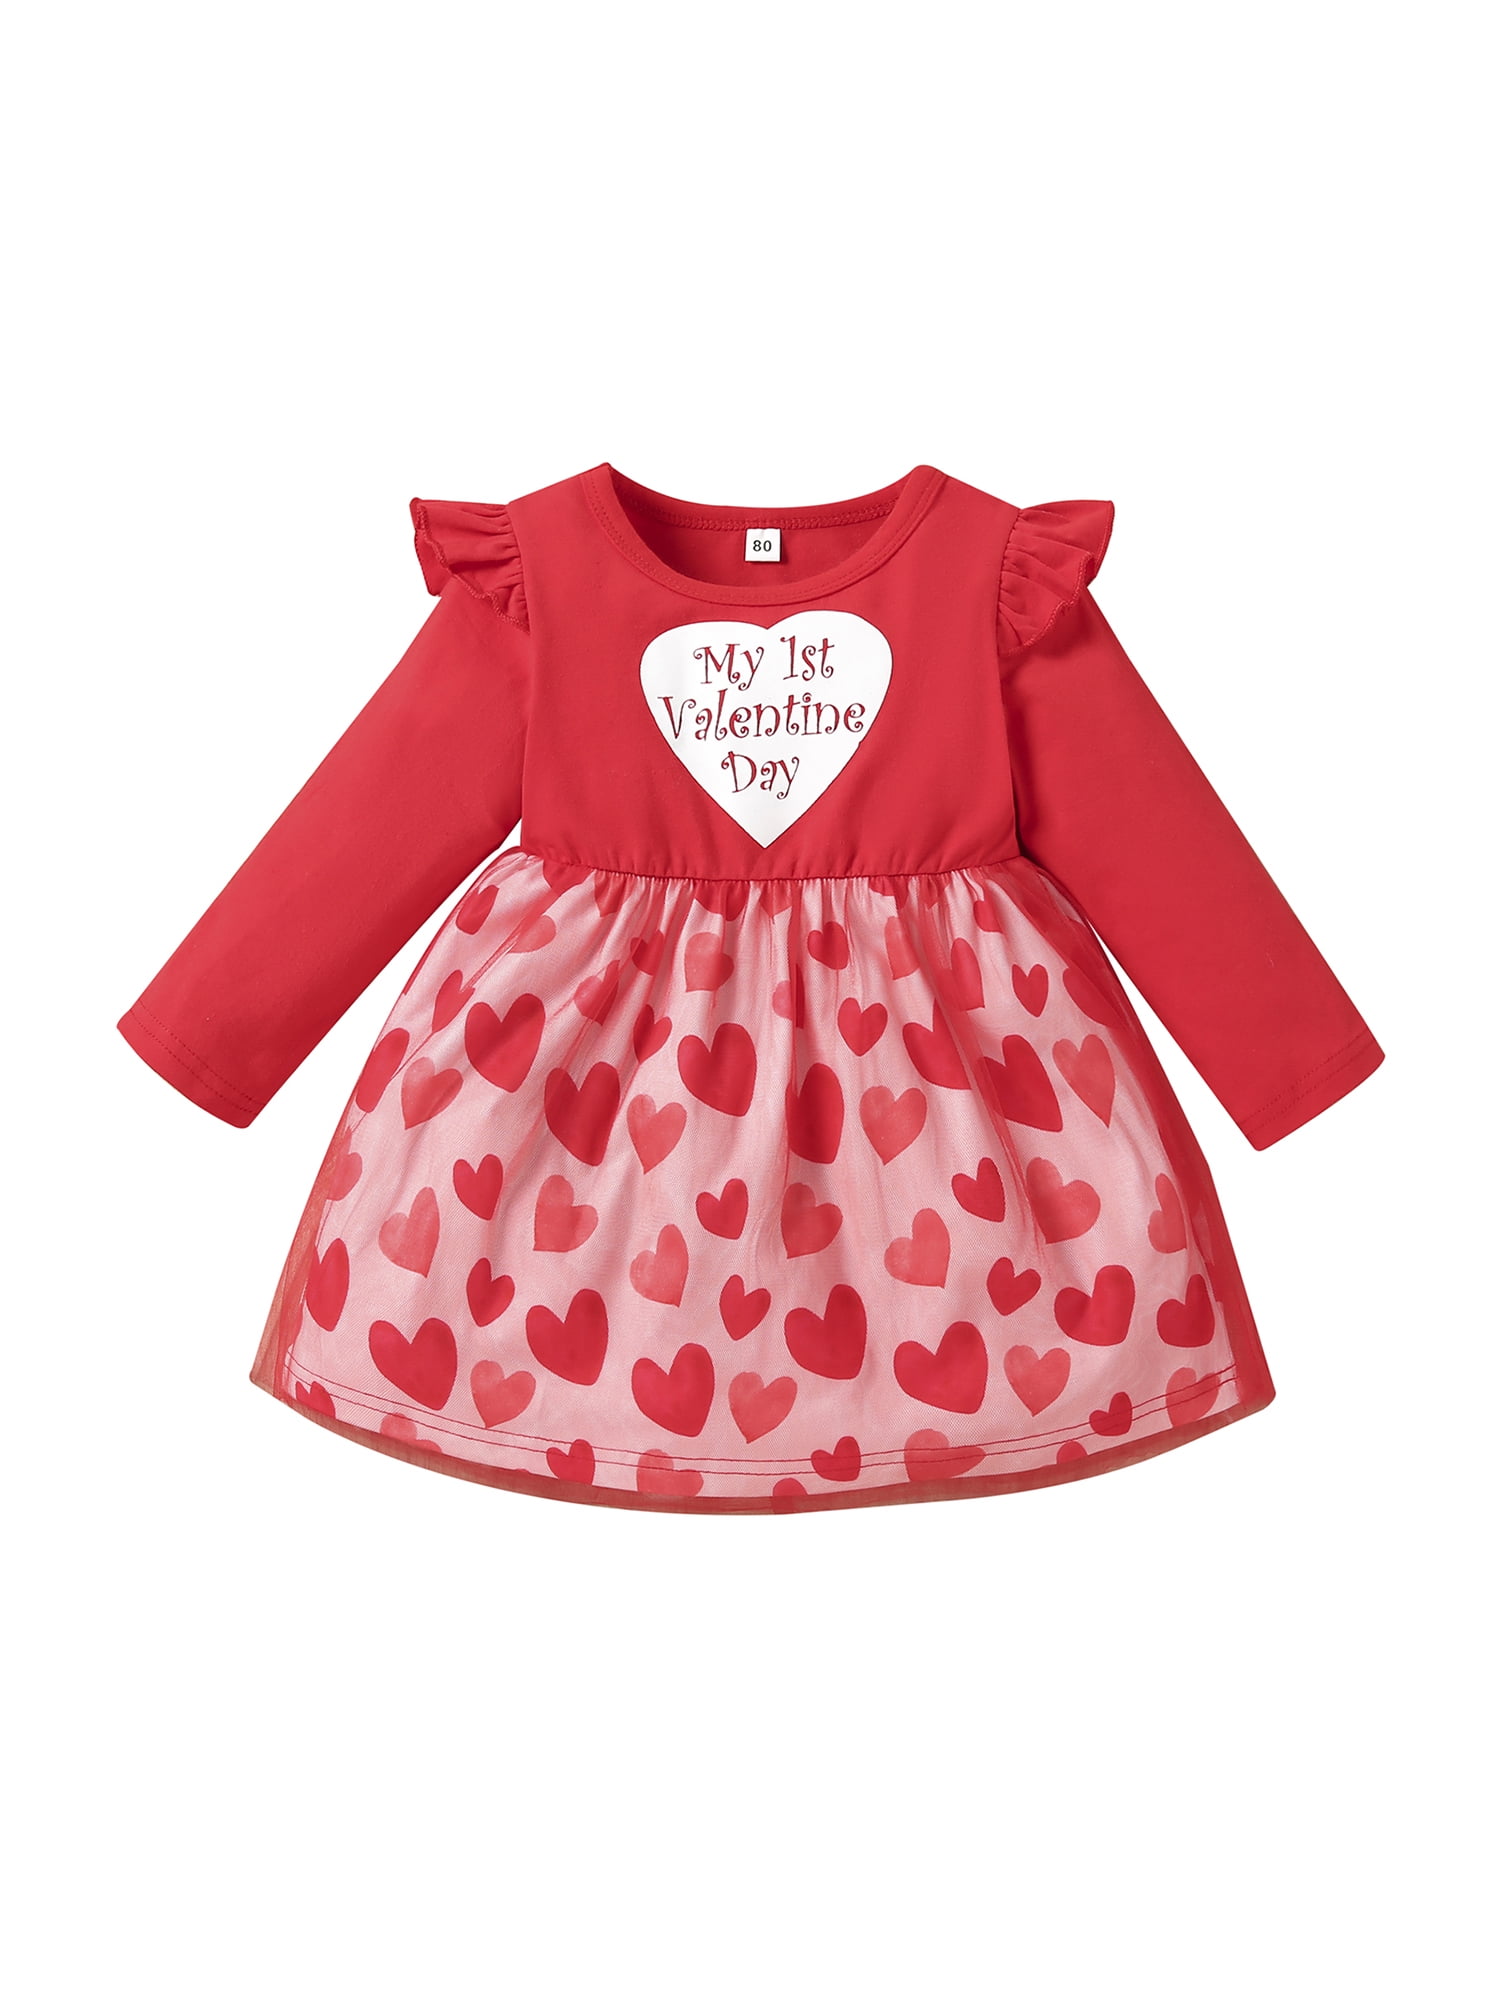 Opperiaya Toddler Baby Girl Valentines Day Dress Cotton Long Sleeve Love&Heart Print Princess Tutu Dress 